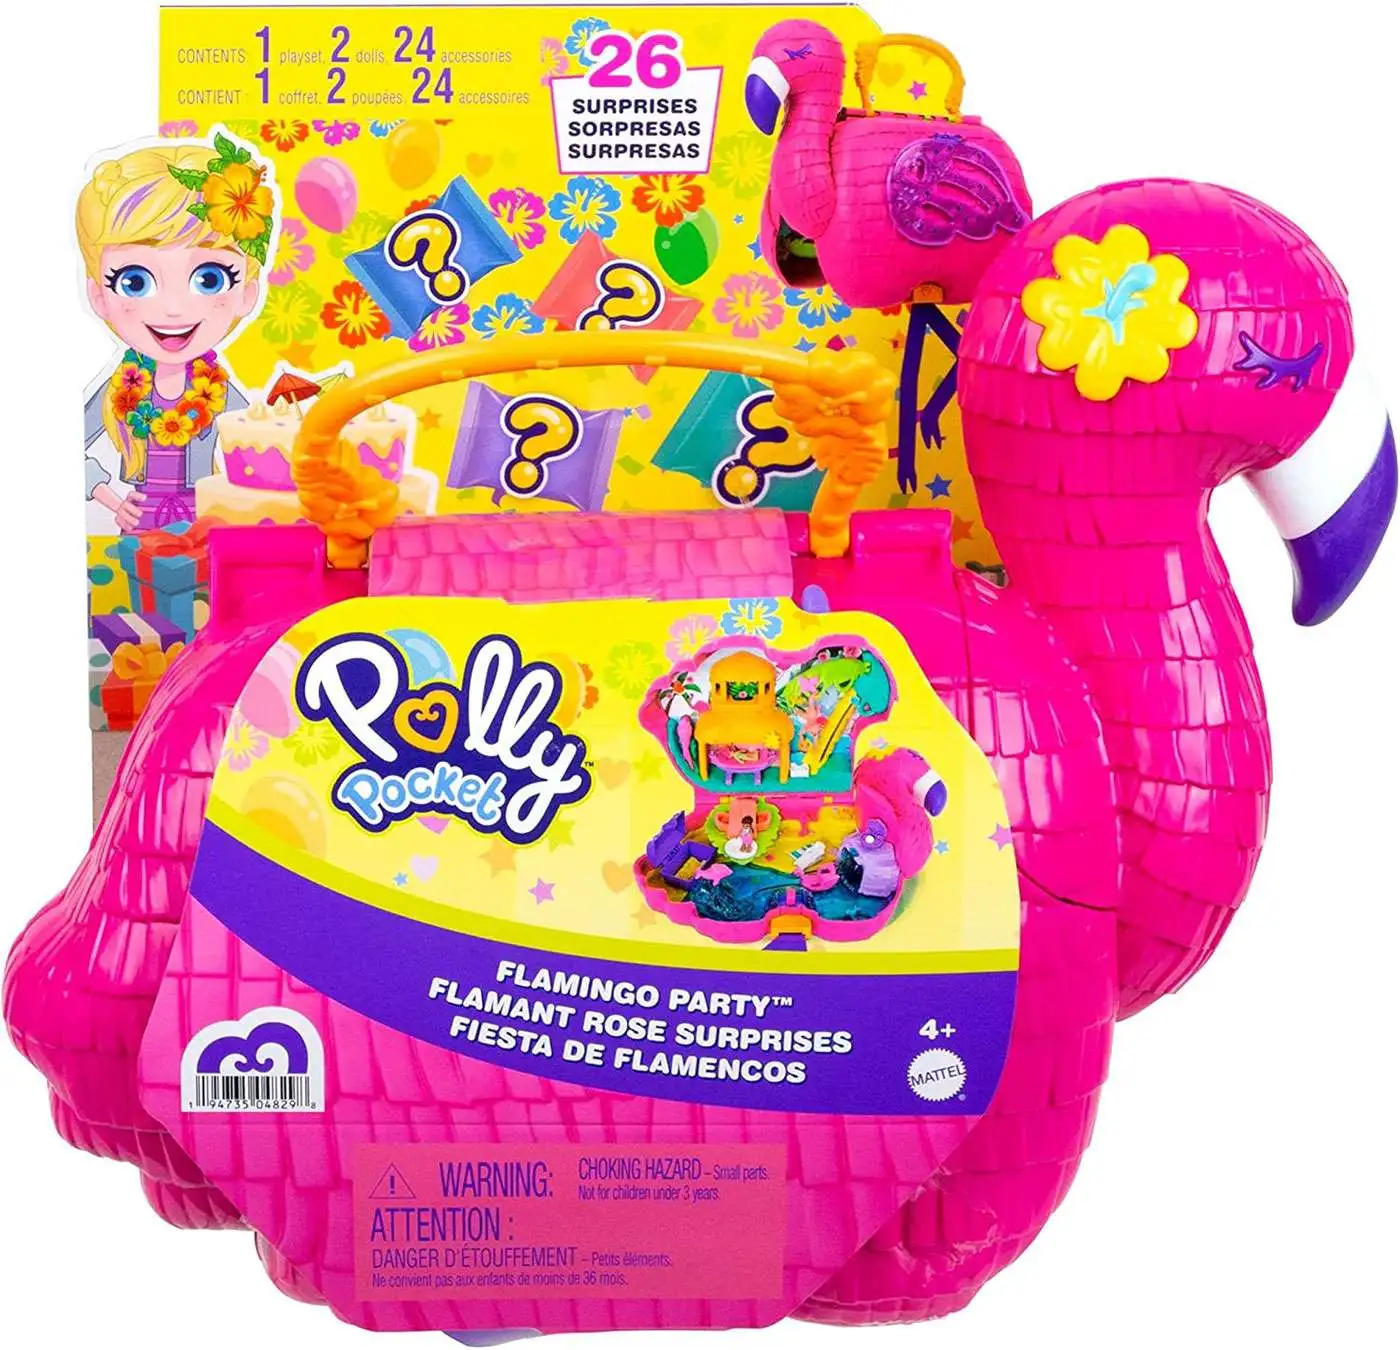 Mattel Polly Pocket Big Pocket World 12 Pop & Swap Pieces Kids Play Toy  Assorted